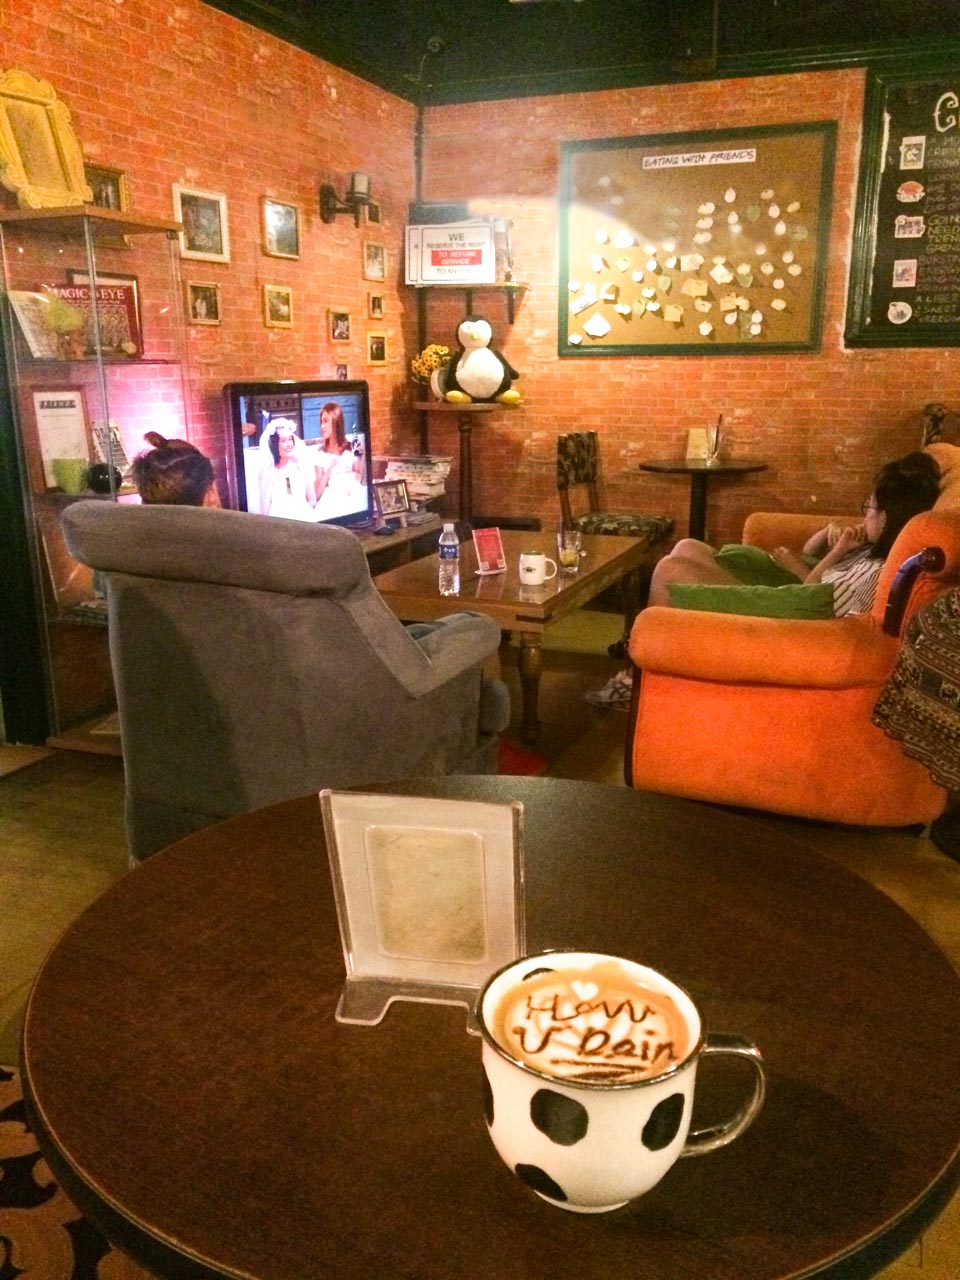 Cup of coffee with "How U Doin" written on the coffee foam on a table inside Beijing's Friends Café